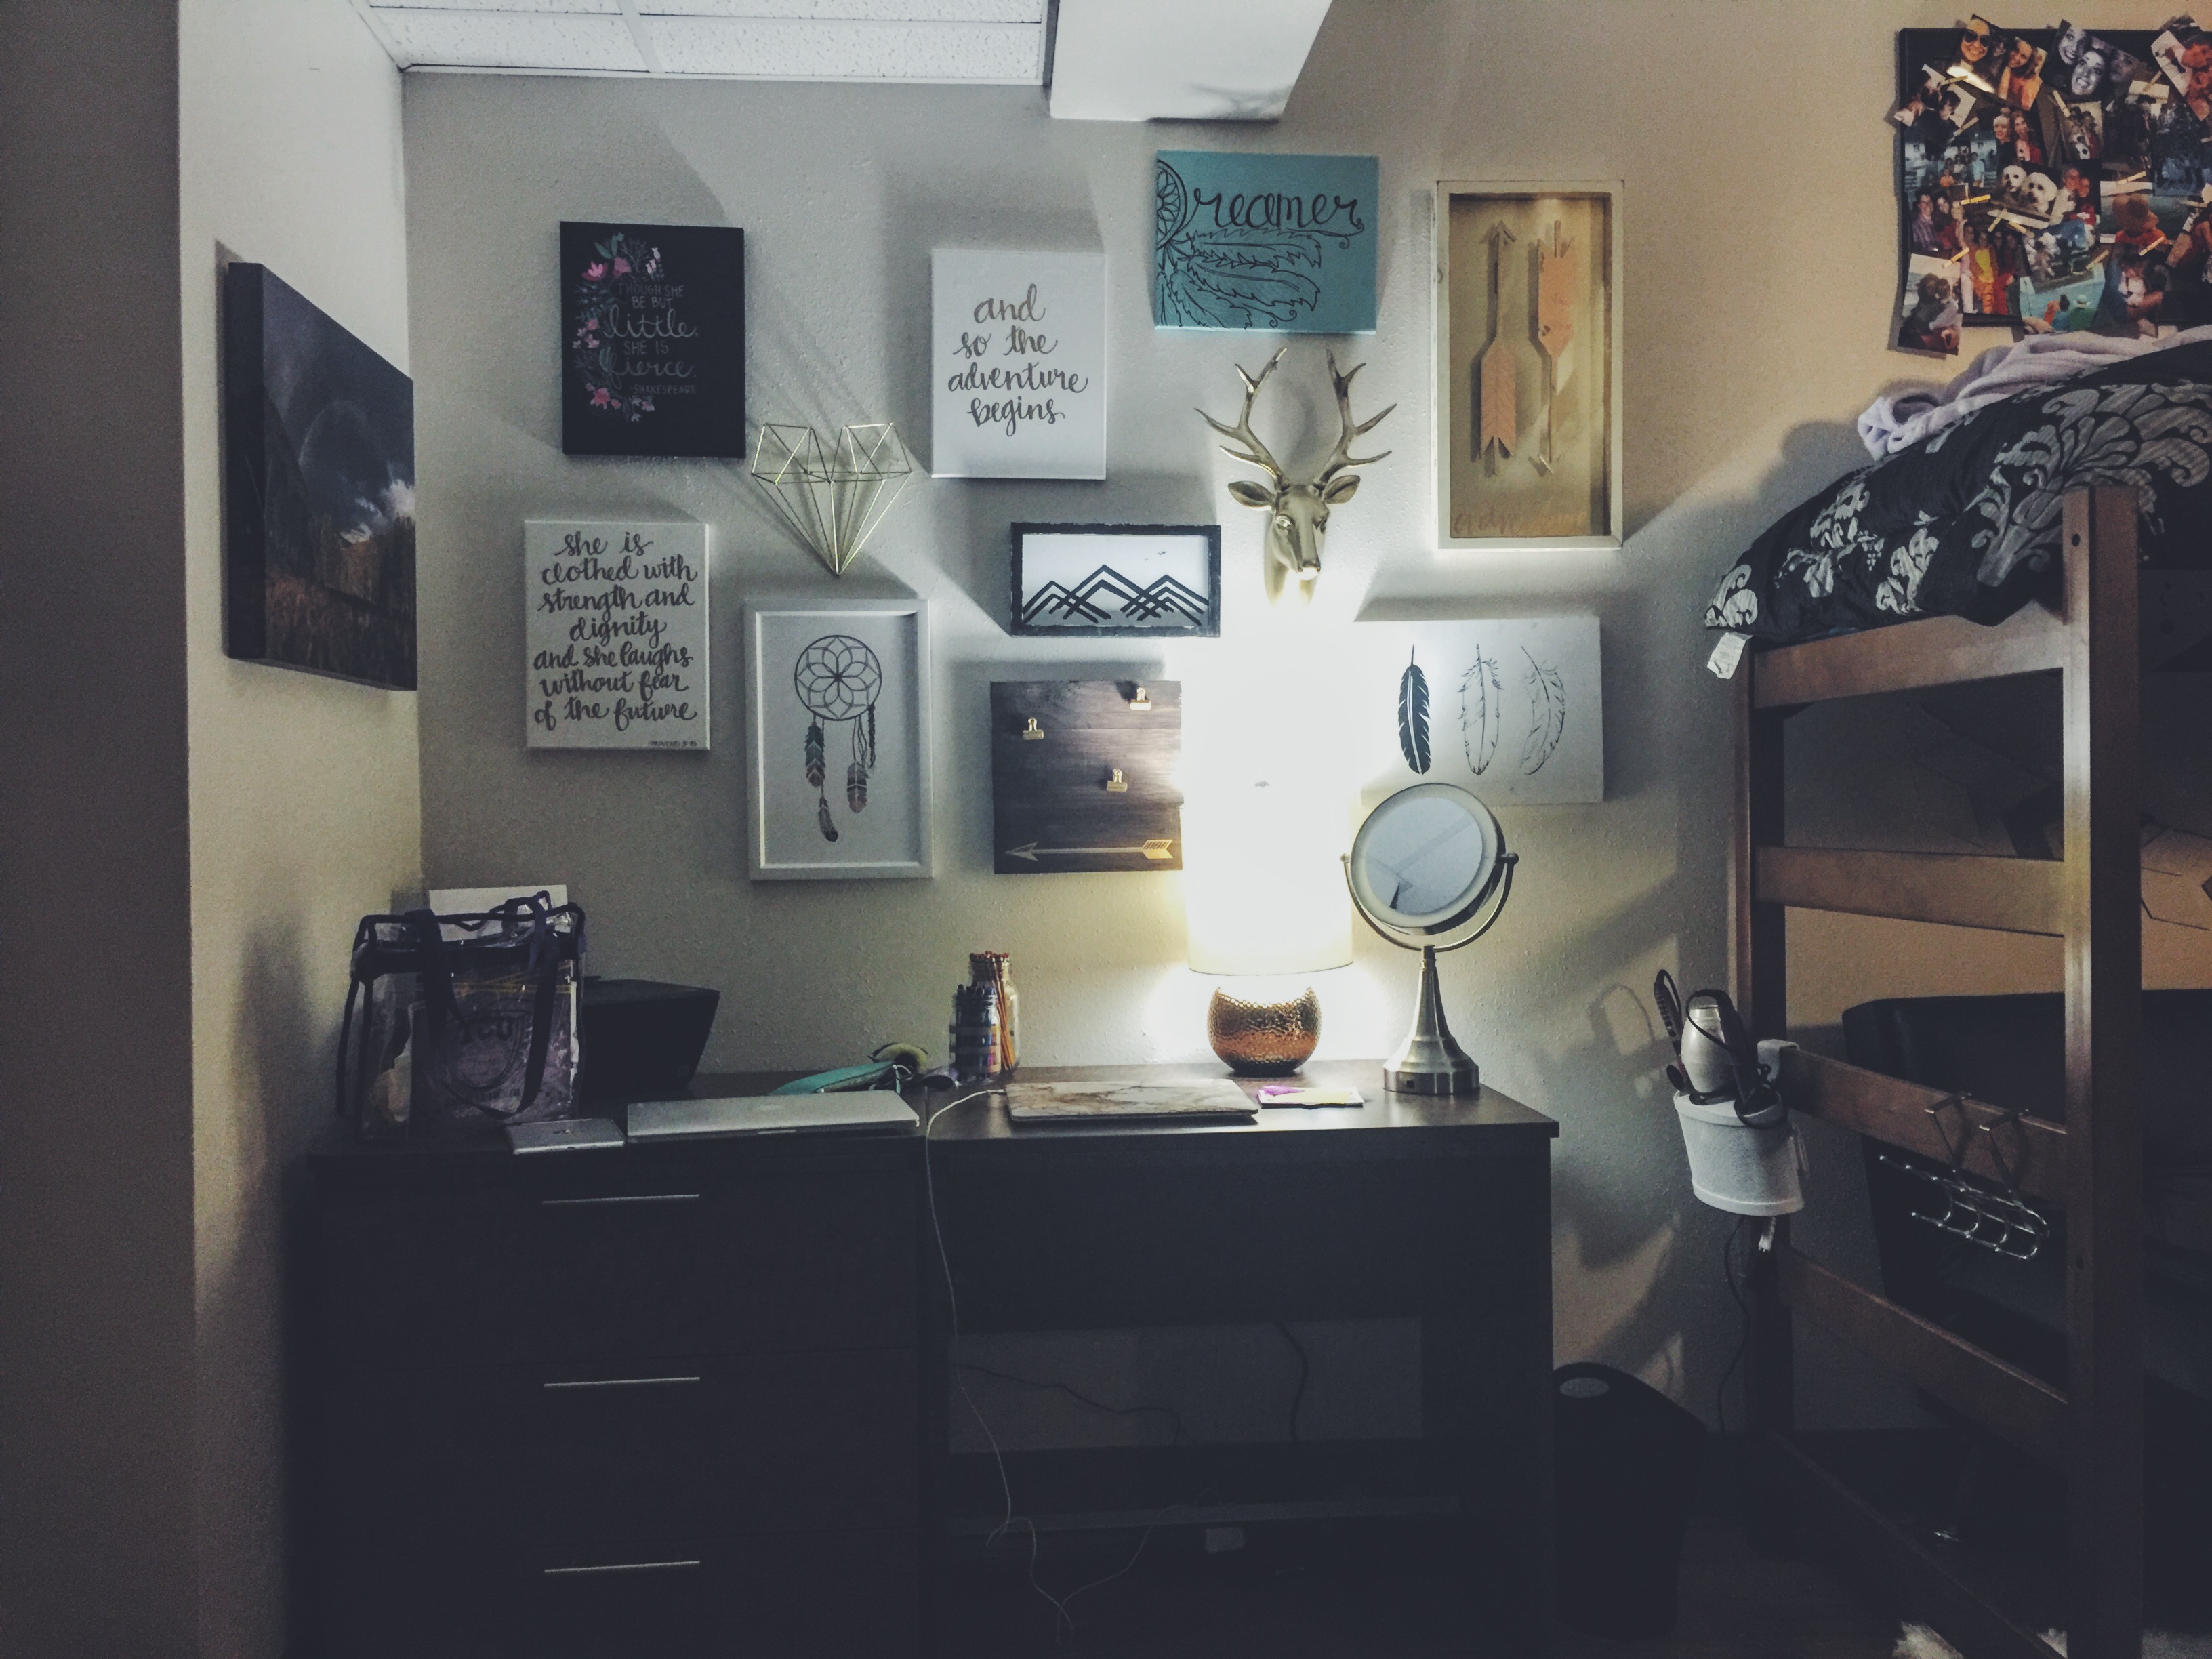 Creative Dorm Room Ideas to Make Your Space More Cozy | Senior Portrait